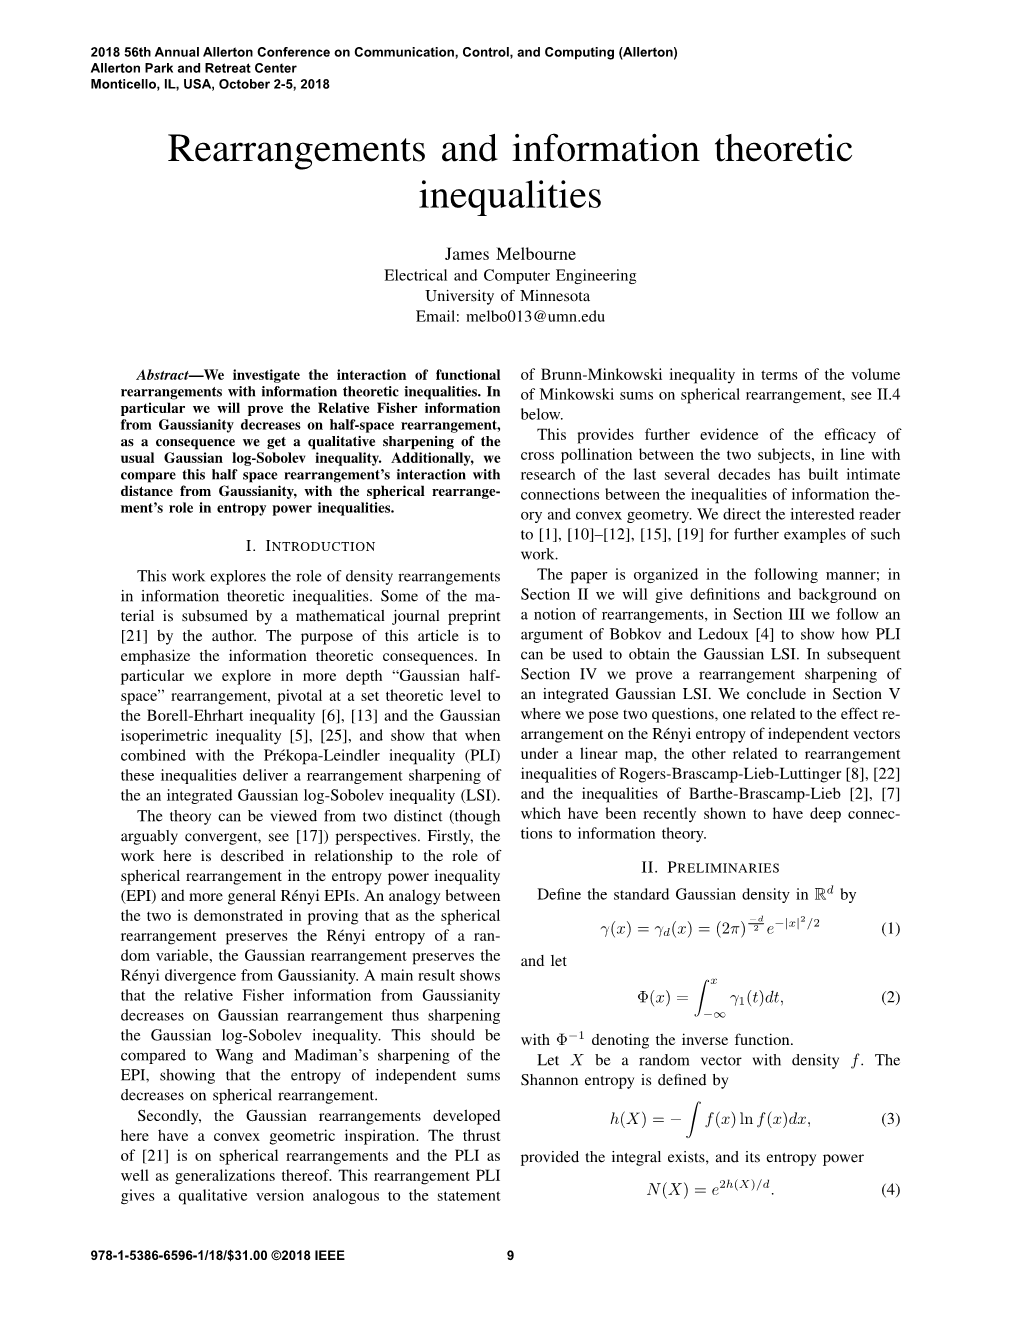 Rearrangements and Information Theoretic Inequalities